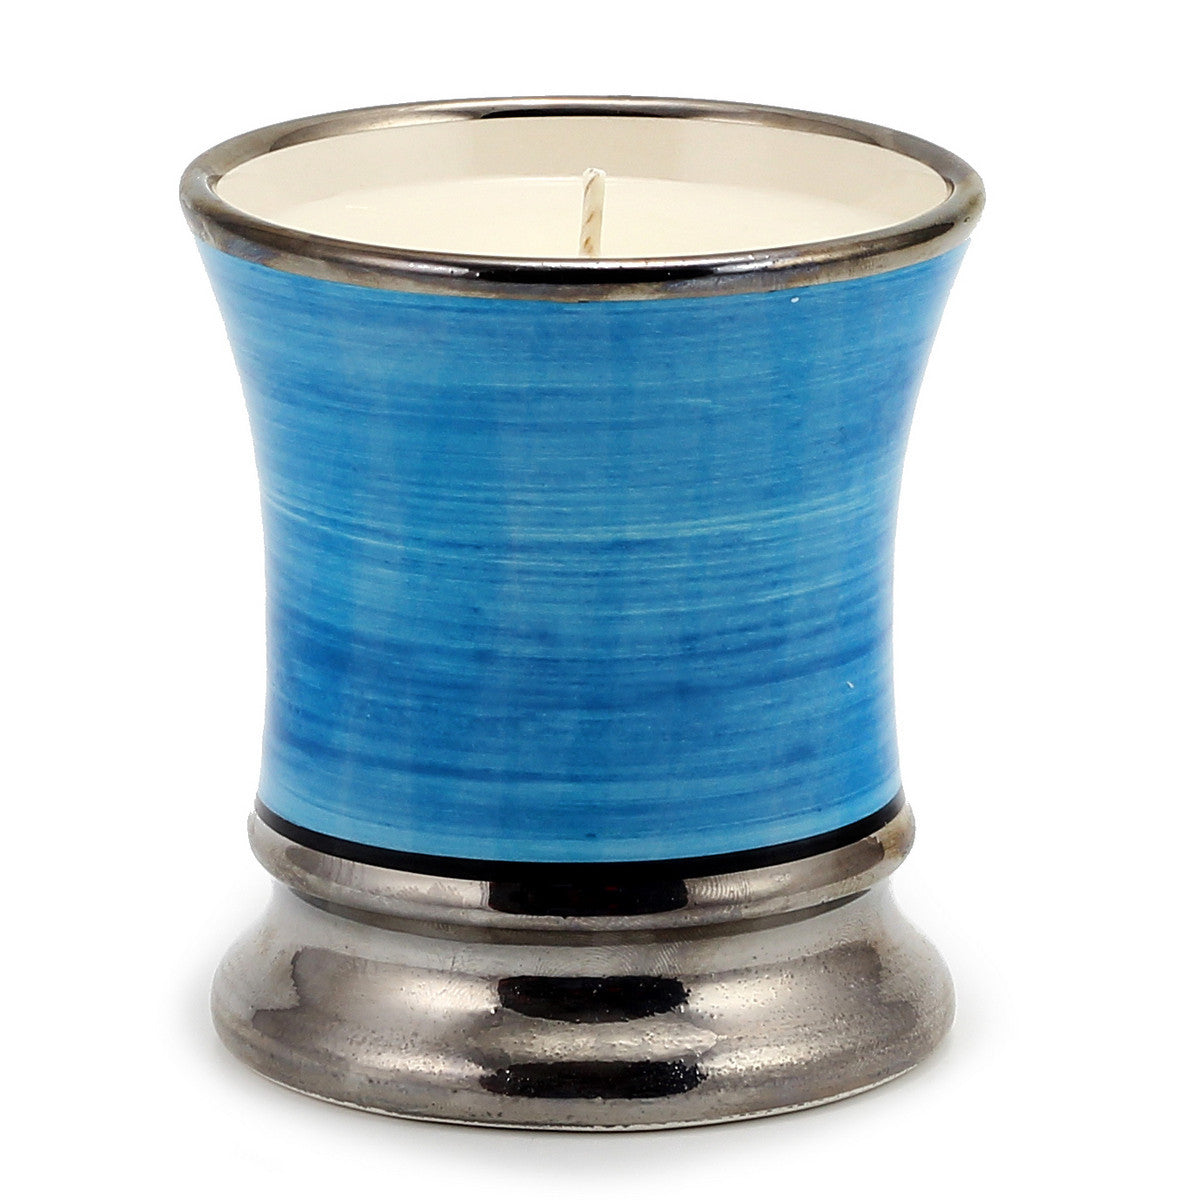 DERUTA CANDLES: Garden MINT Scented Candle - Deluxe Precious Cup Coloris Celeste Design with Pure Platinum Rim (10 Oz) - Artistica.com